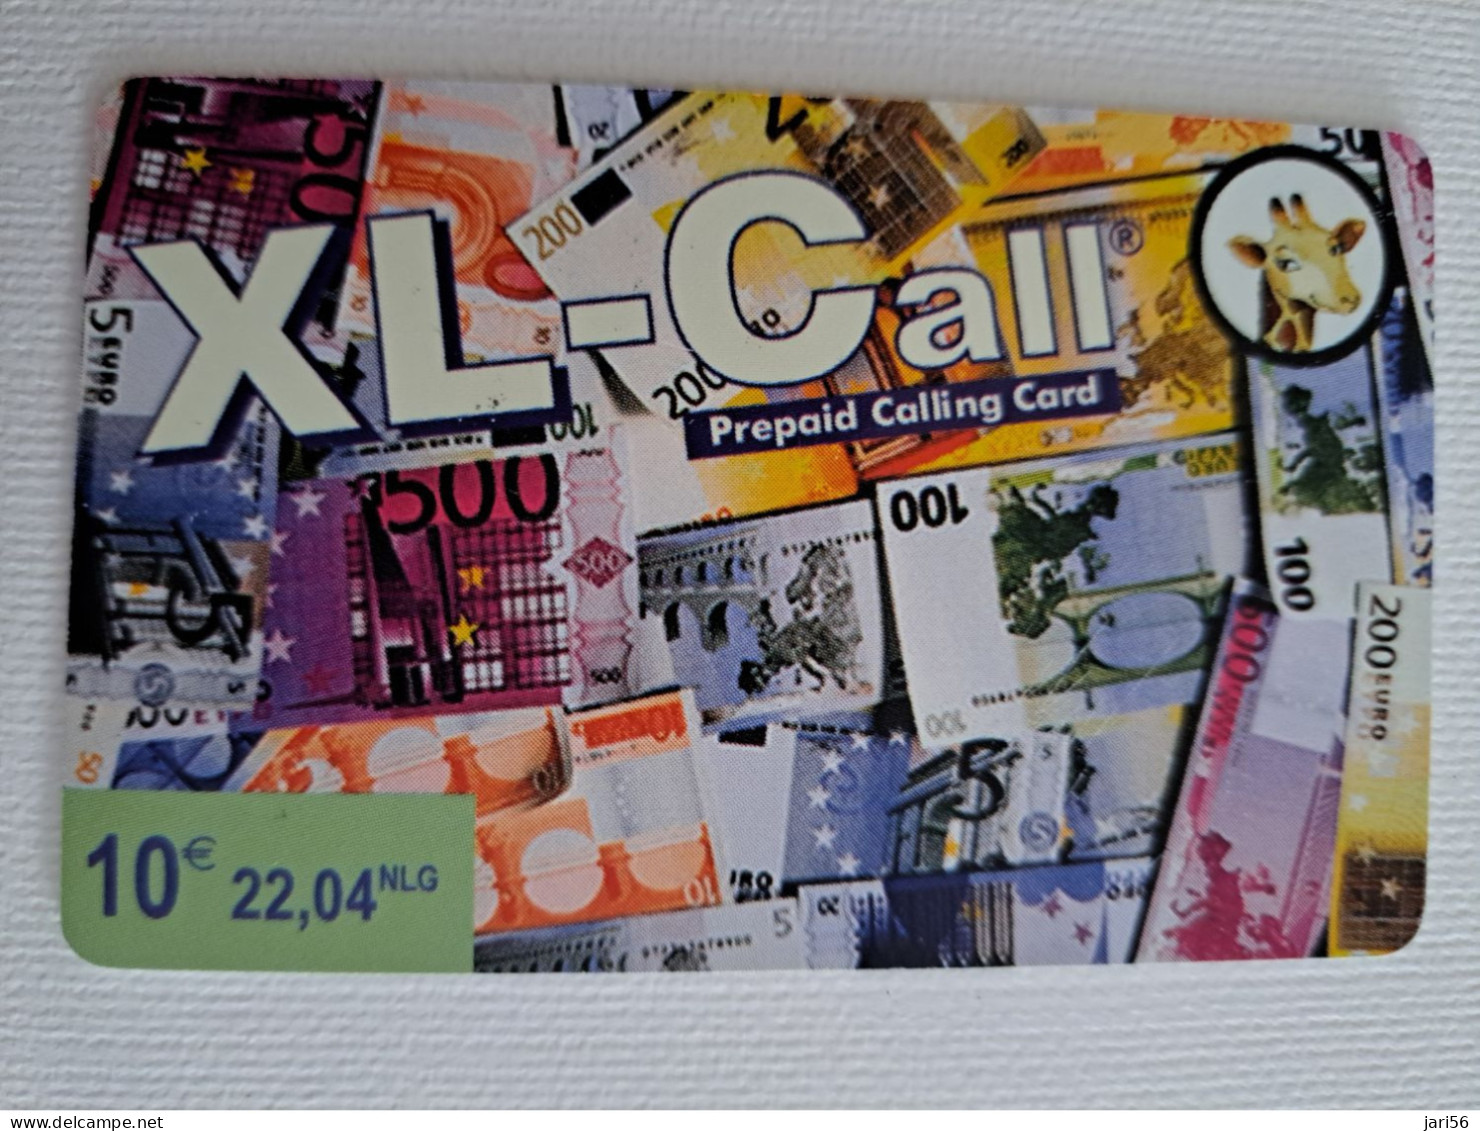 NETHERLANDS  HFL 10,-  XL-CALL  /BANKNOTES     / OLDER CARD    PREPAID  Nice Used  ** 15766** - [3] Tarjetas Móvil, Prepagadas Y Recargos